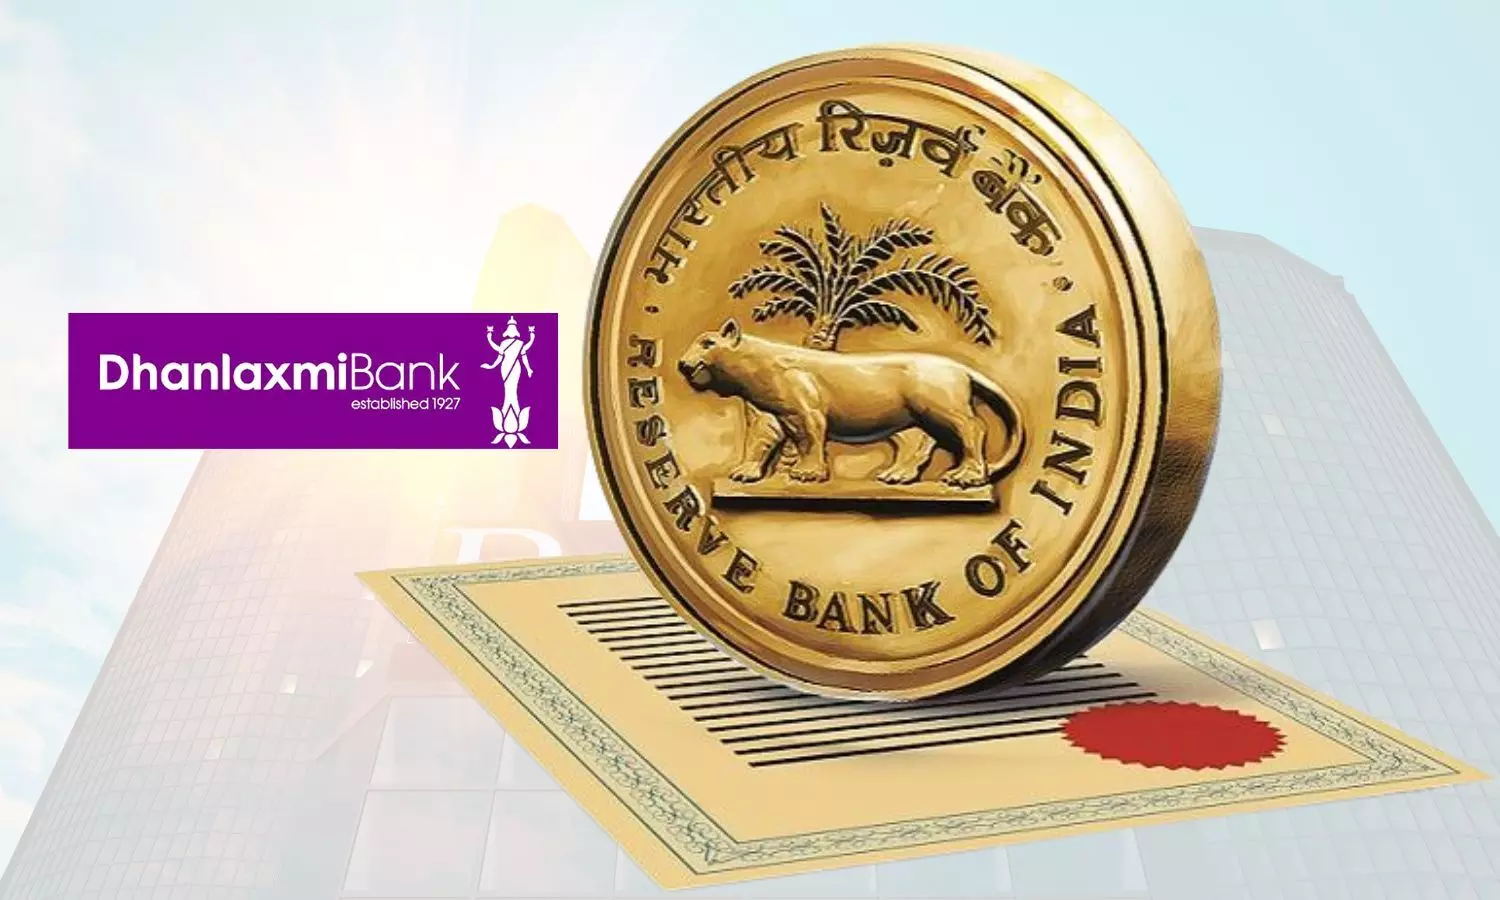 Dhanlaxmi Bank and RBI logos